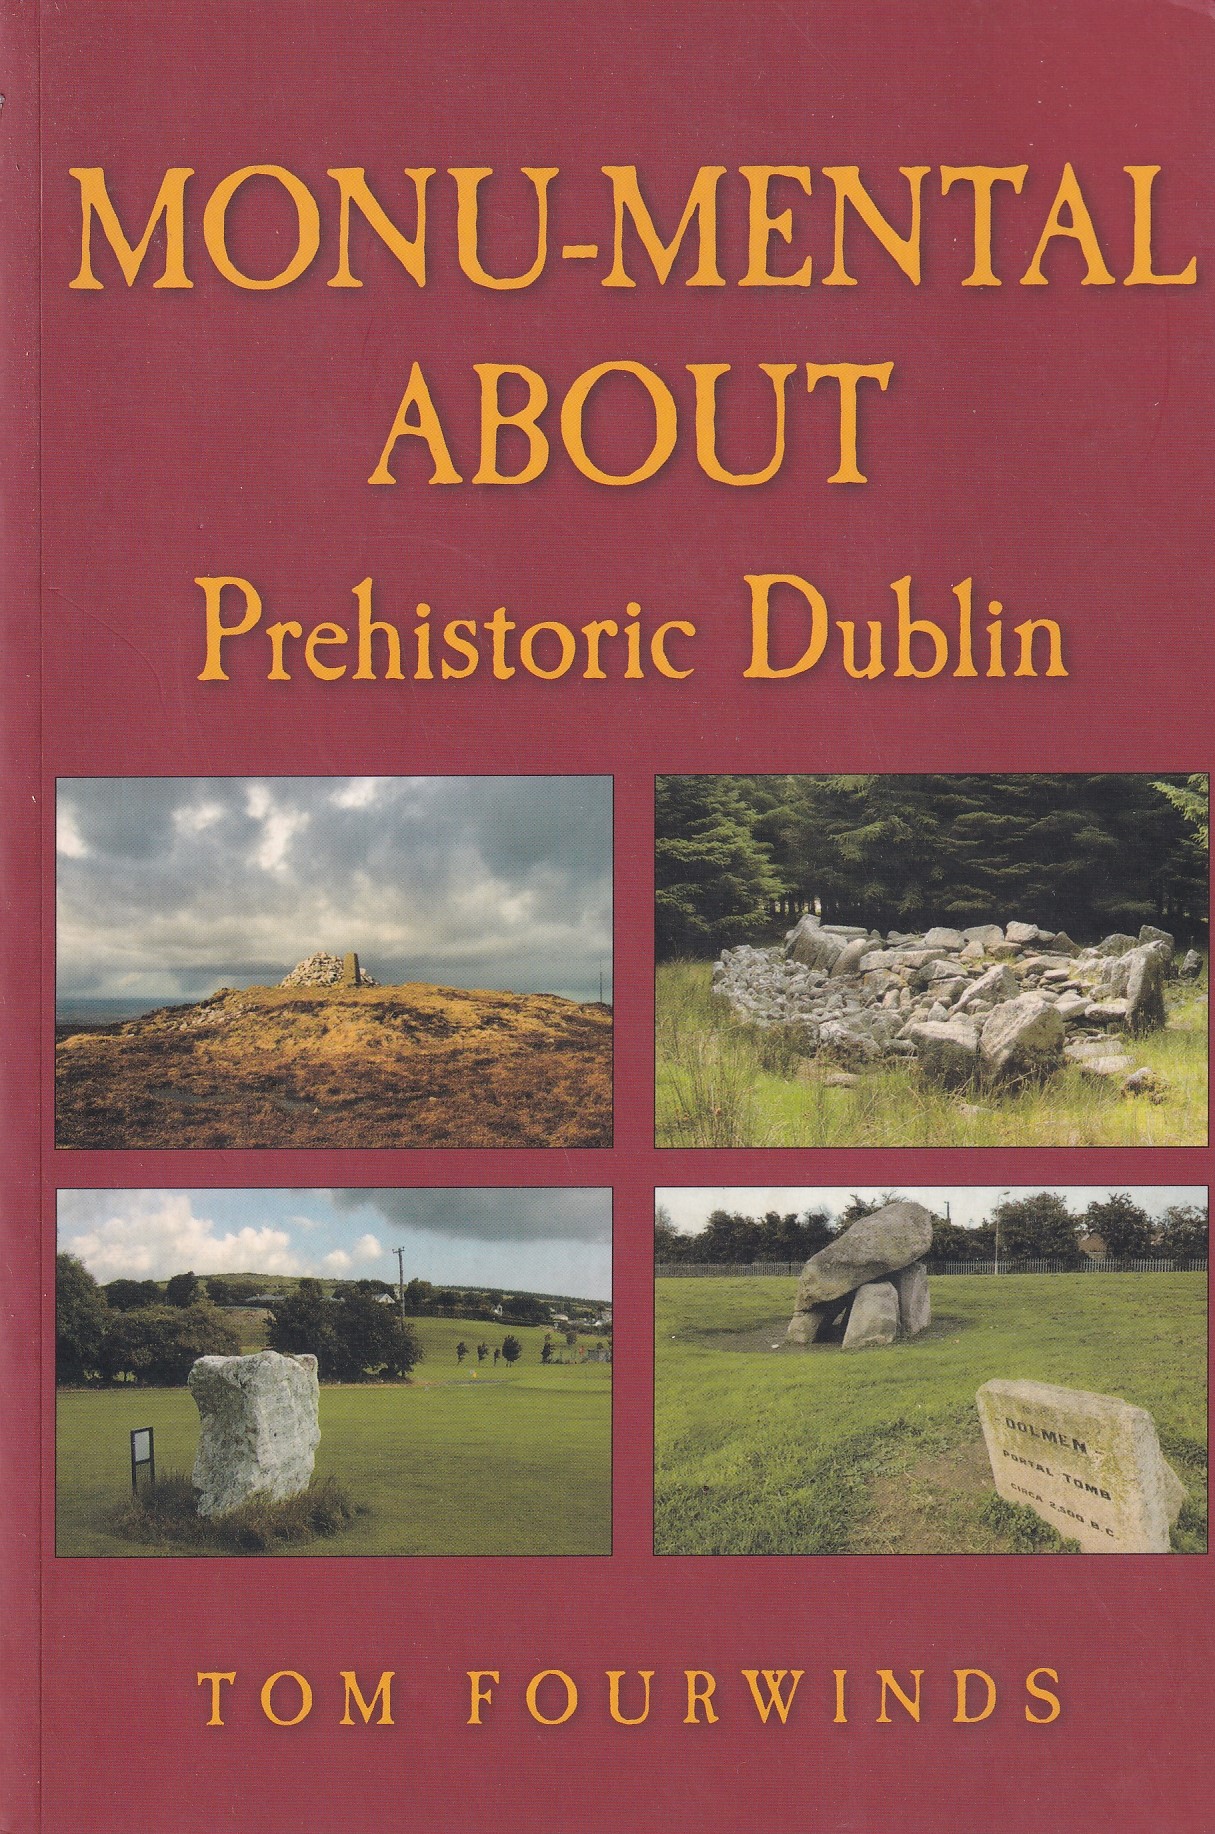 Monu-Mental About: Prehistoric Dublin | Tom Fourwinds | Charlie Byrne's